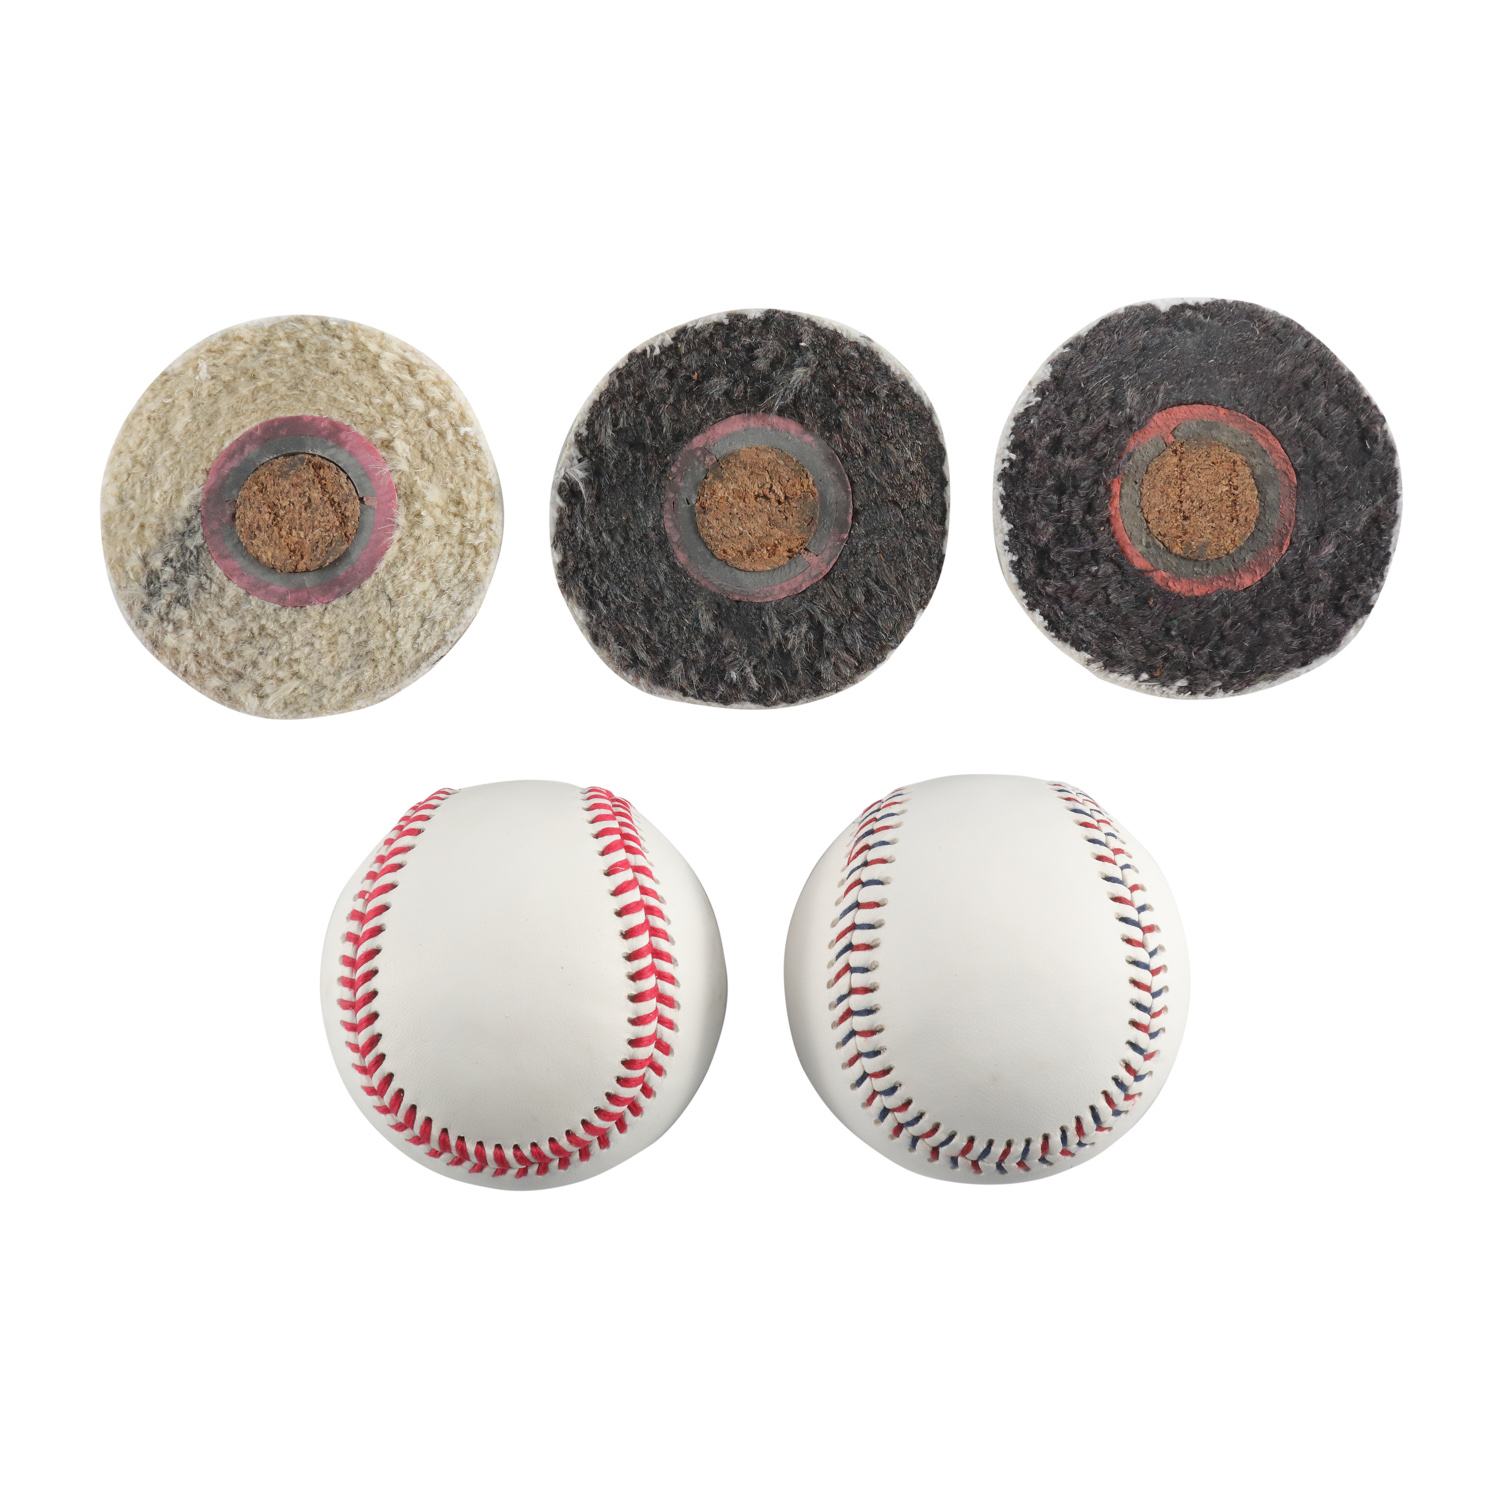 9inch 5oz Official League Baseball/Practice Baseball/Leather Baseball for Training